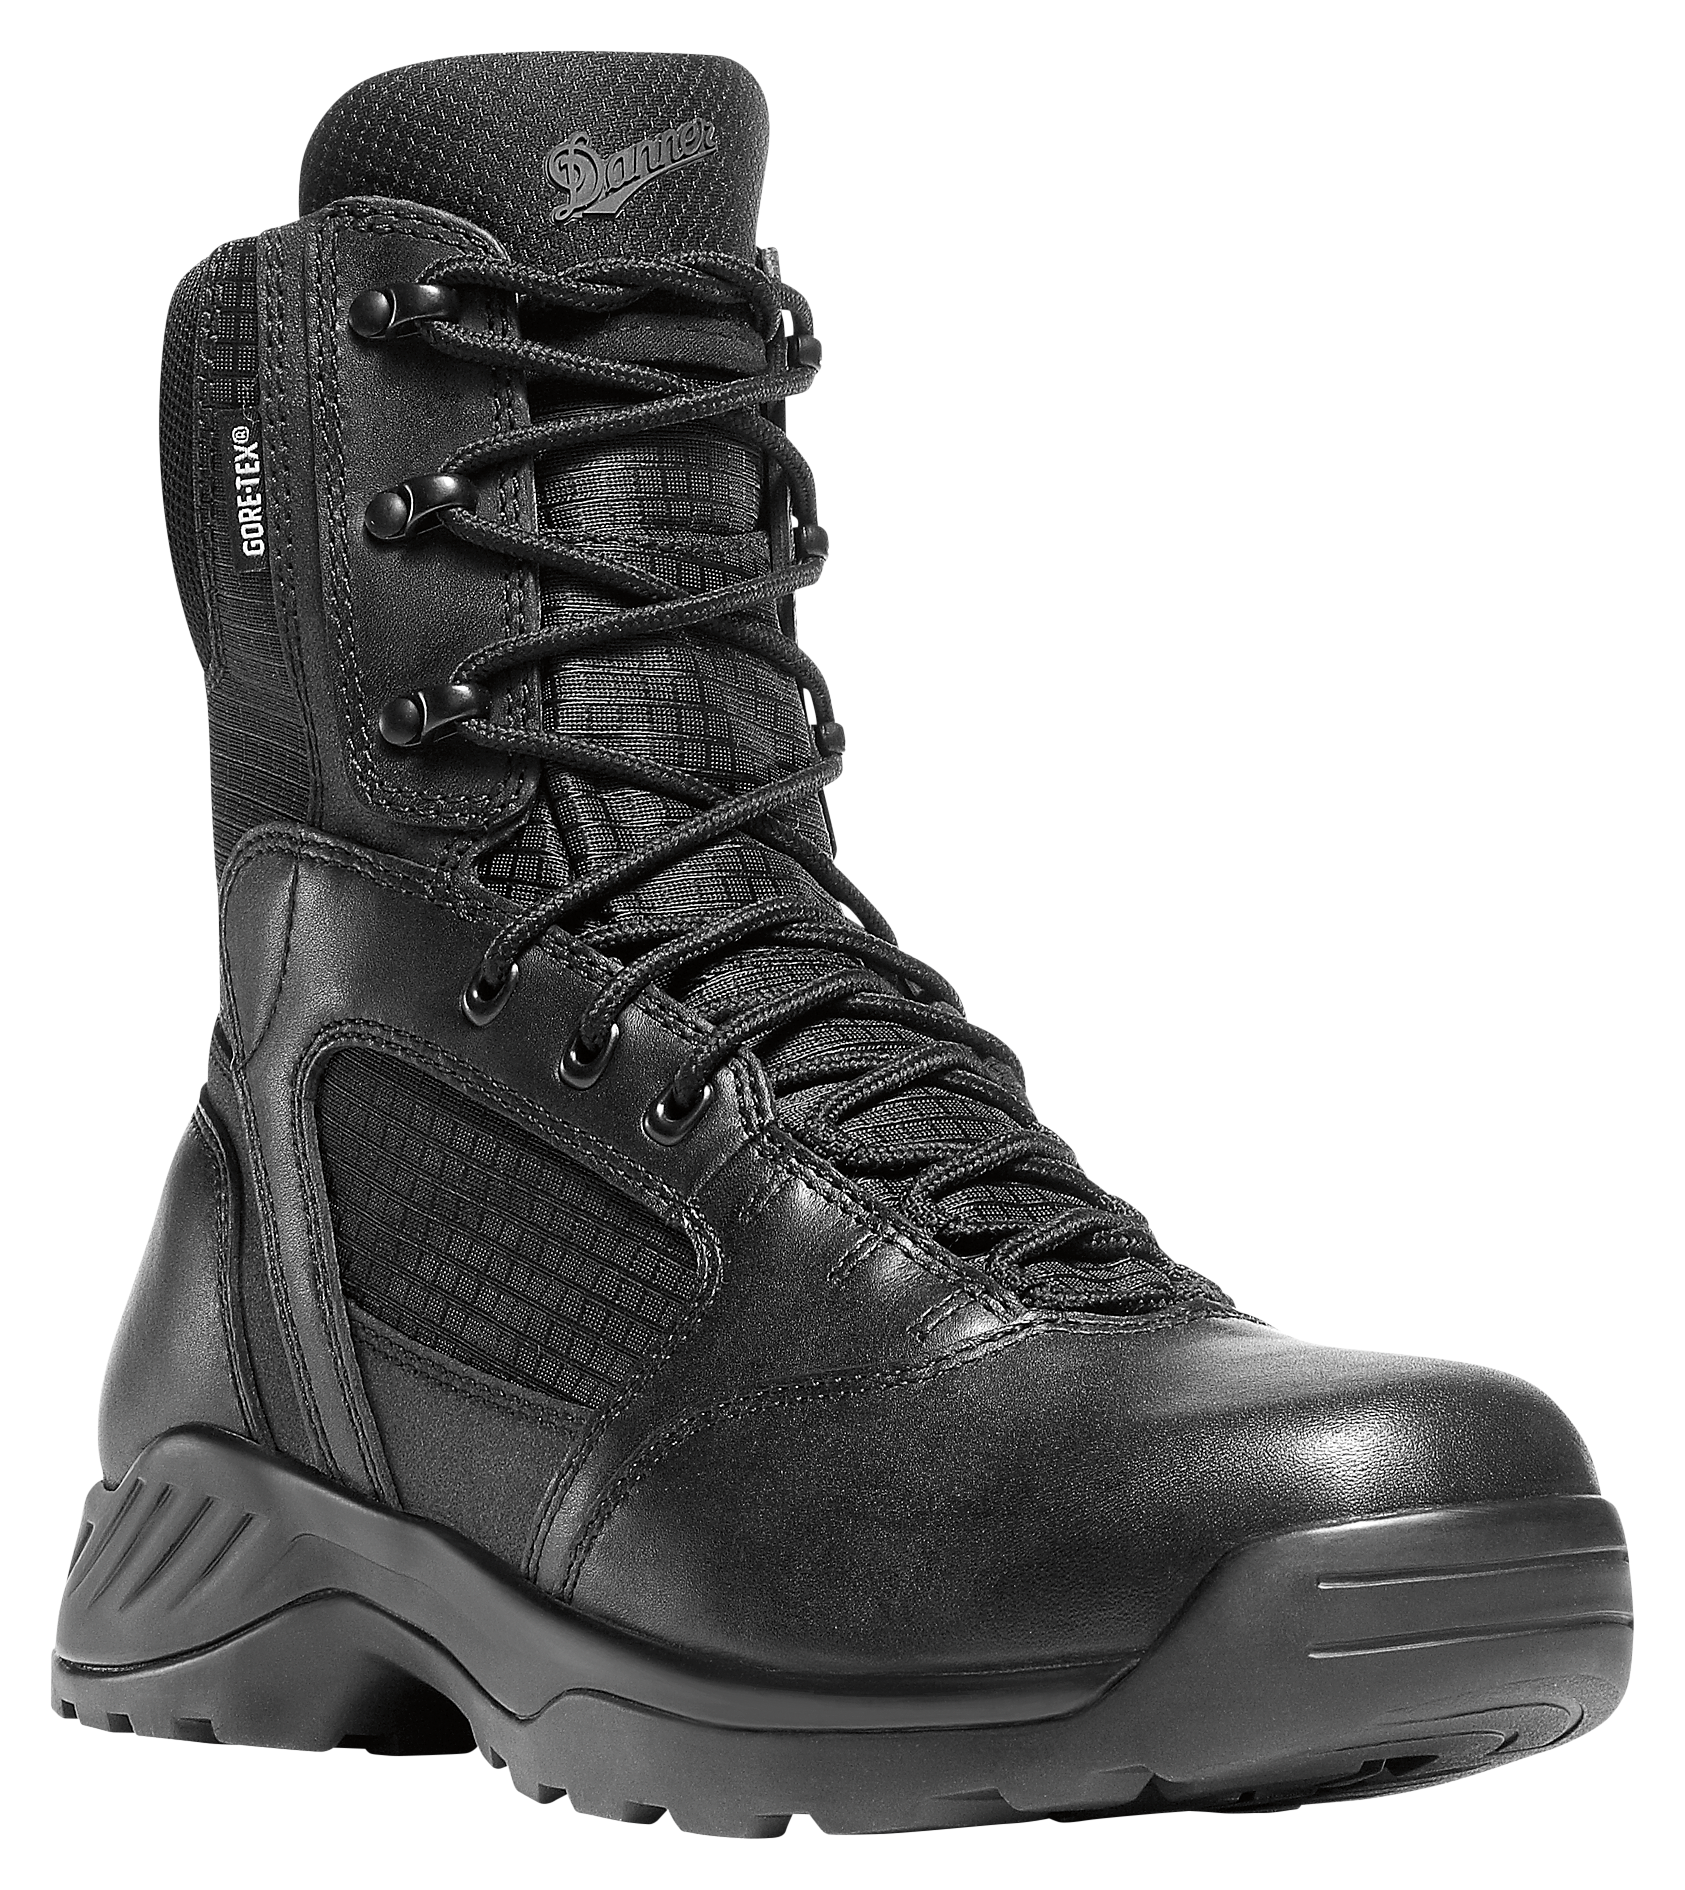 Danner Kinetic GTX Side-Zip Waterproof Tactical Duty Boots for Men - Black - 9.5W